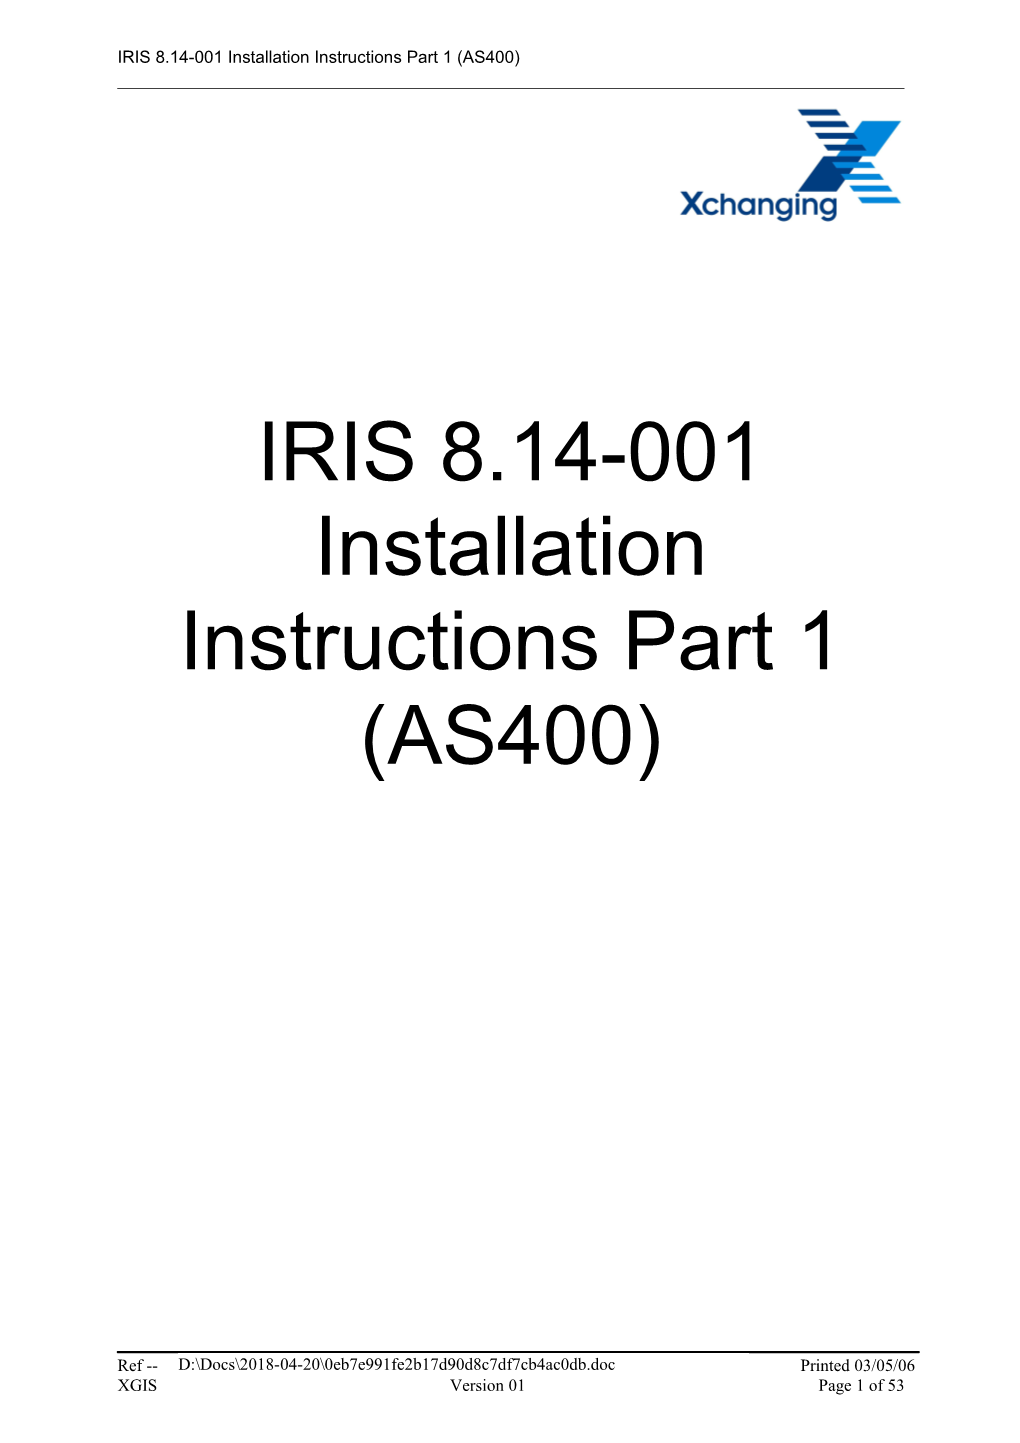 IRIS - Version 7.13.1 - Upgrade Installation Guide